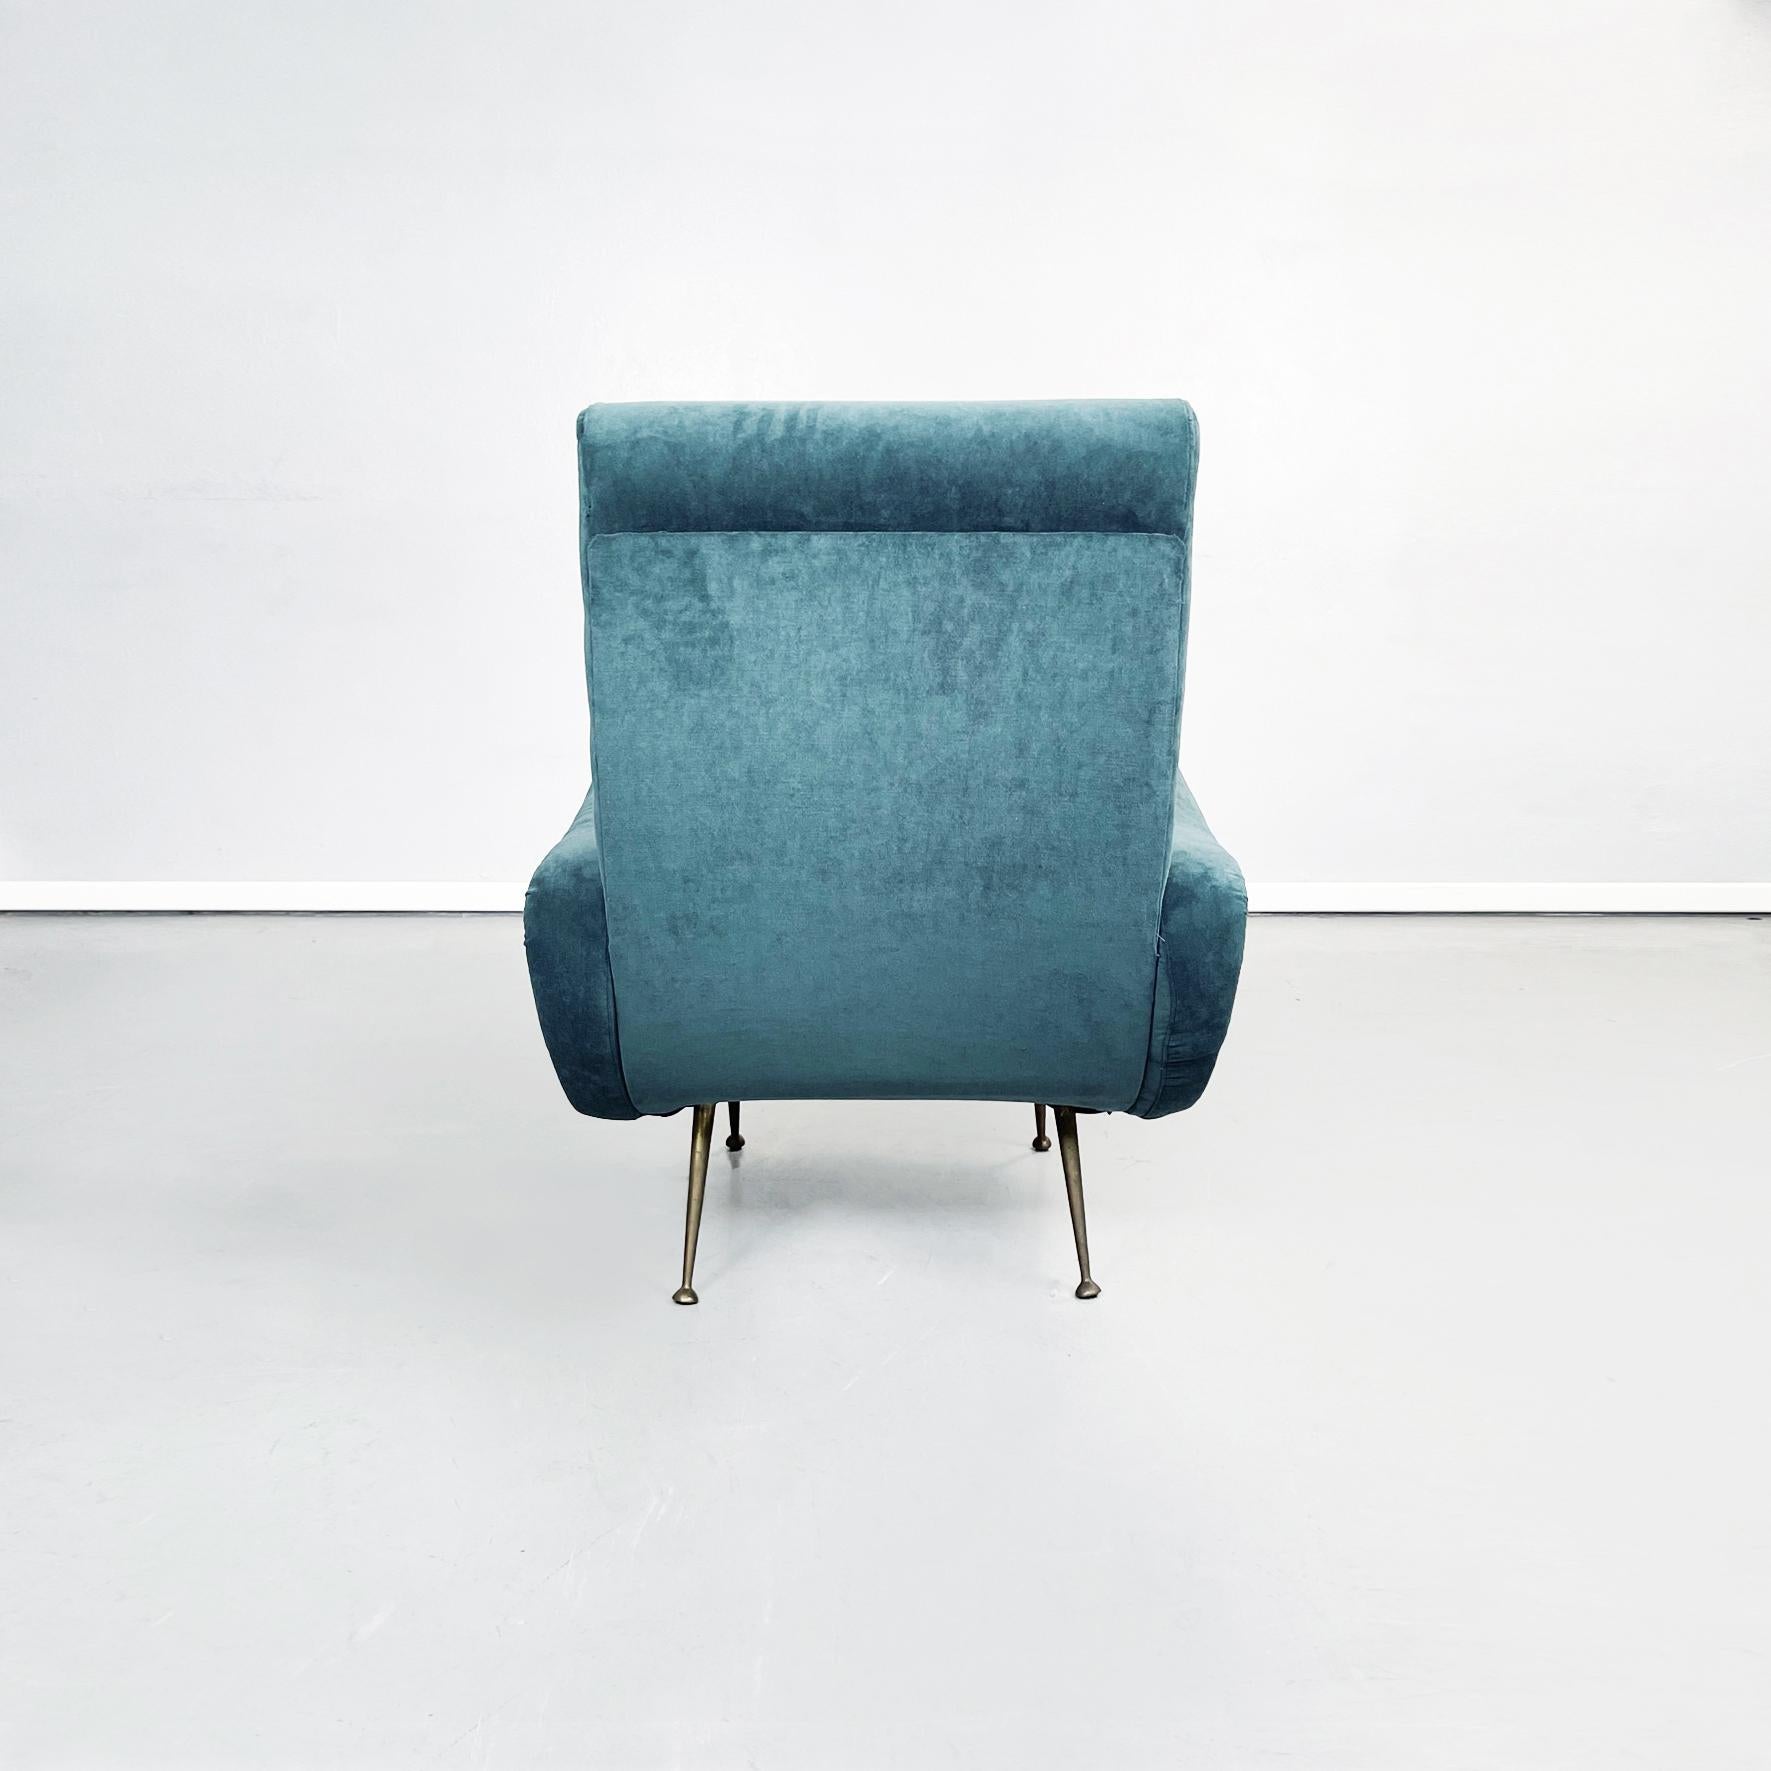 Mid-20th Century Italian Mid-Century Modern Armchair in Blue Fabric and Brass Feet, 1950s